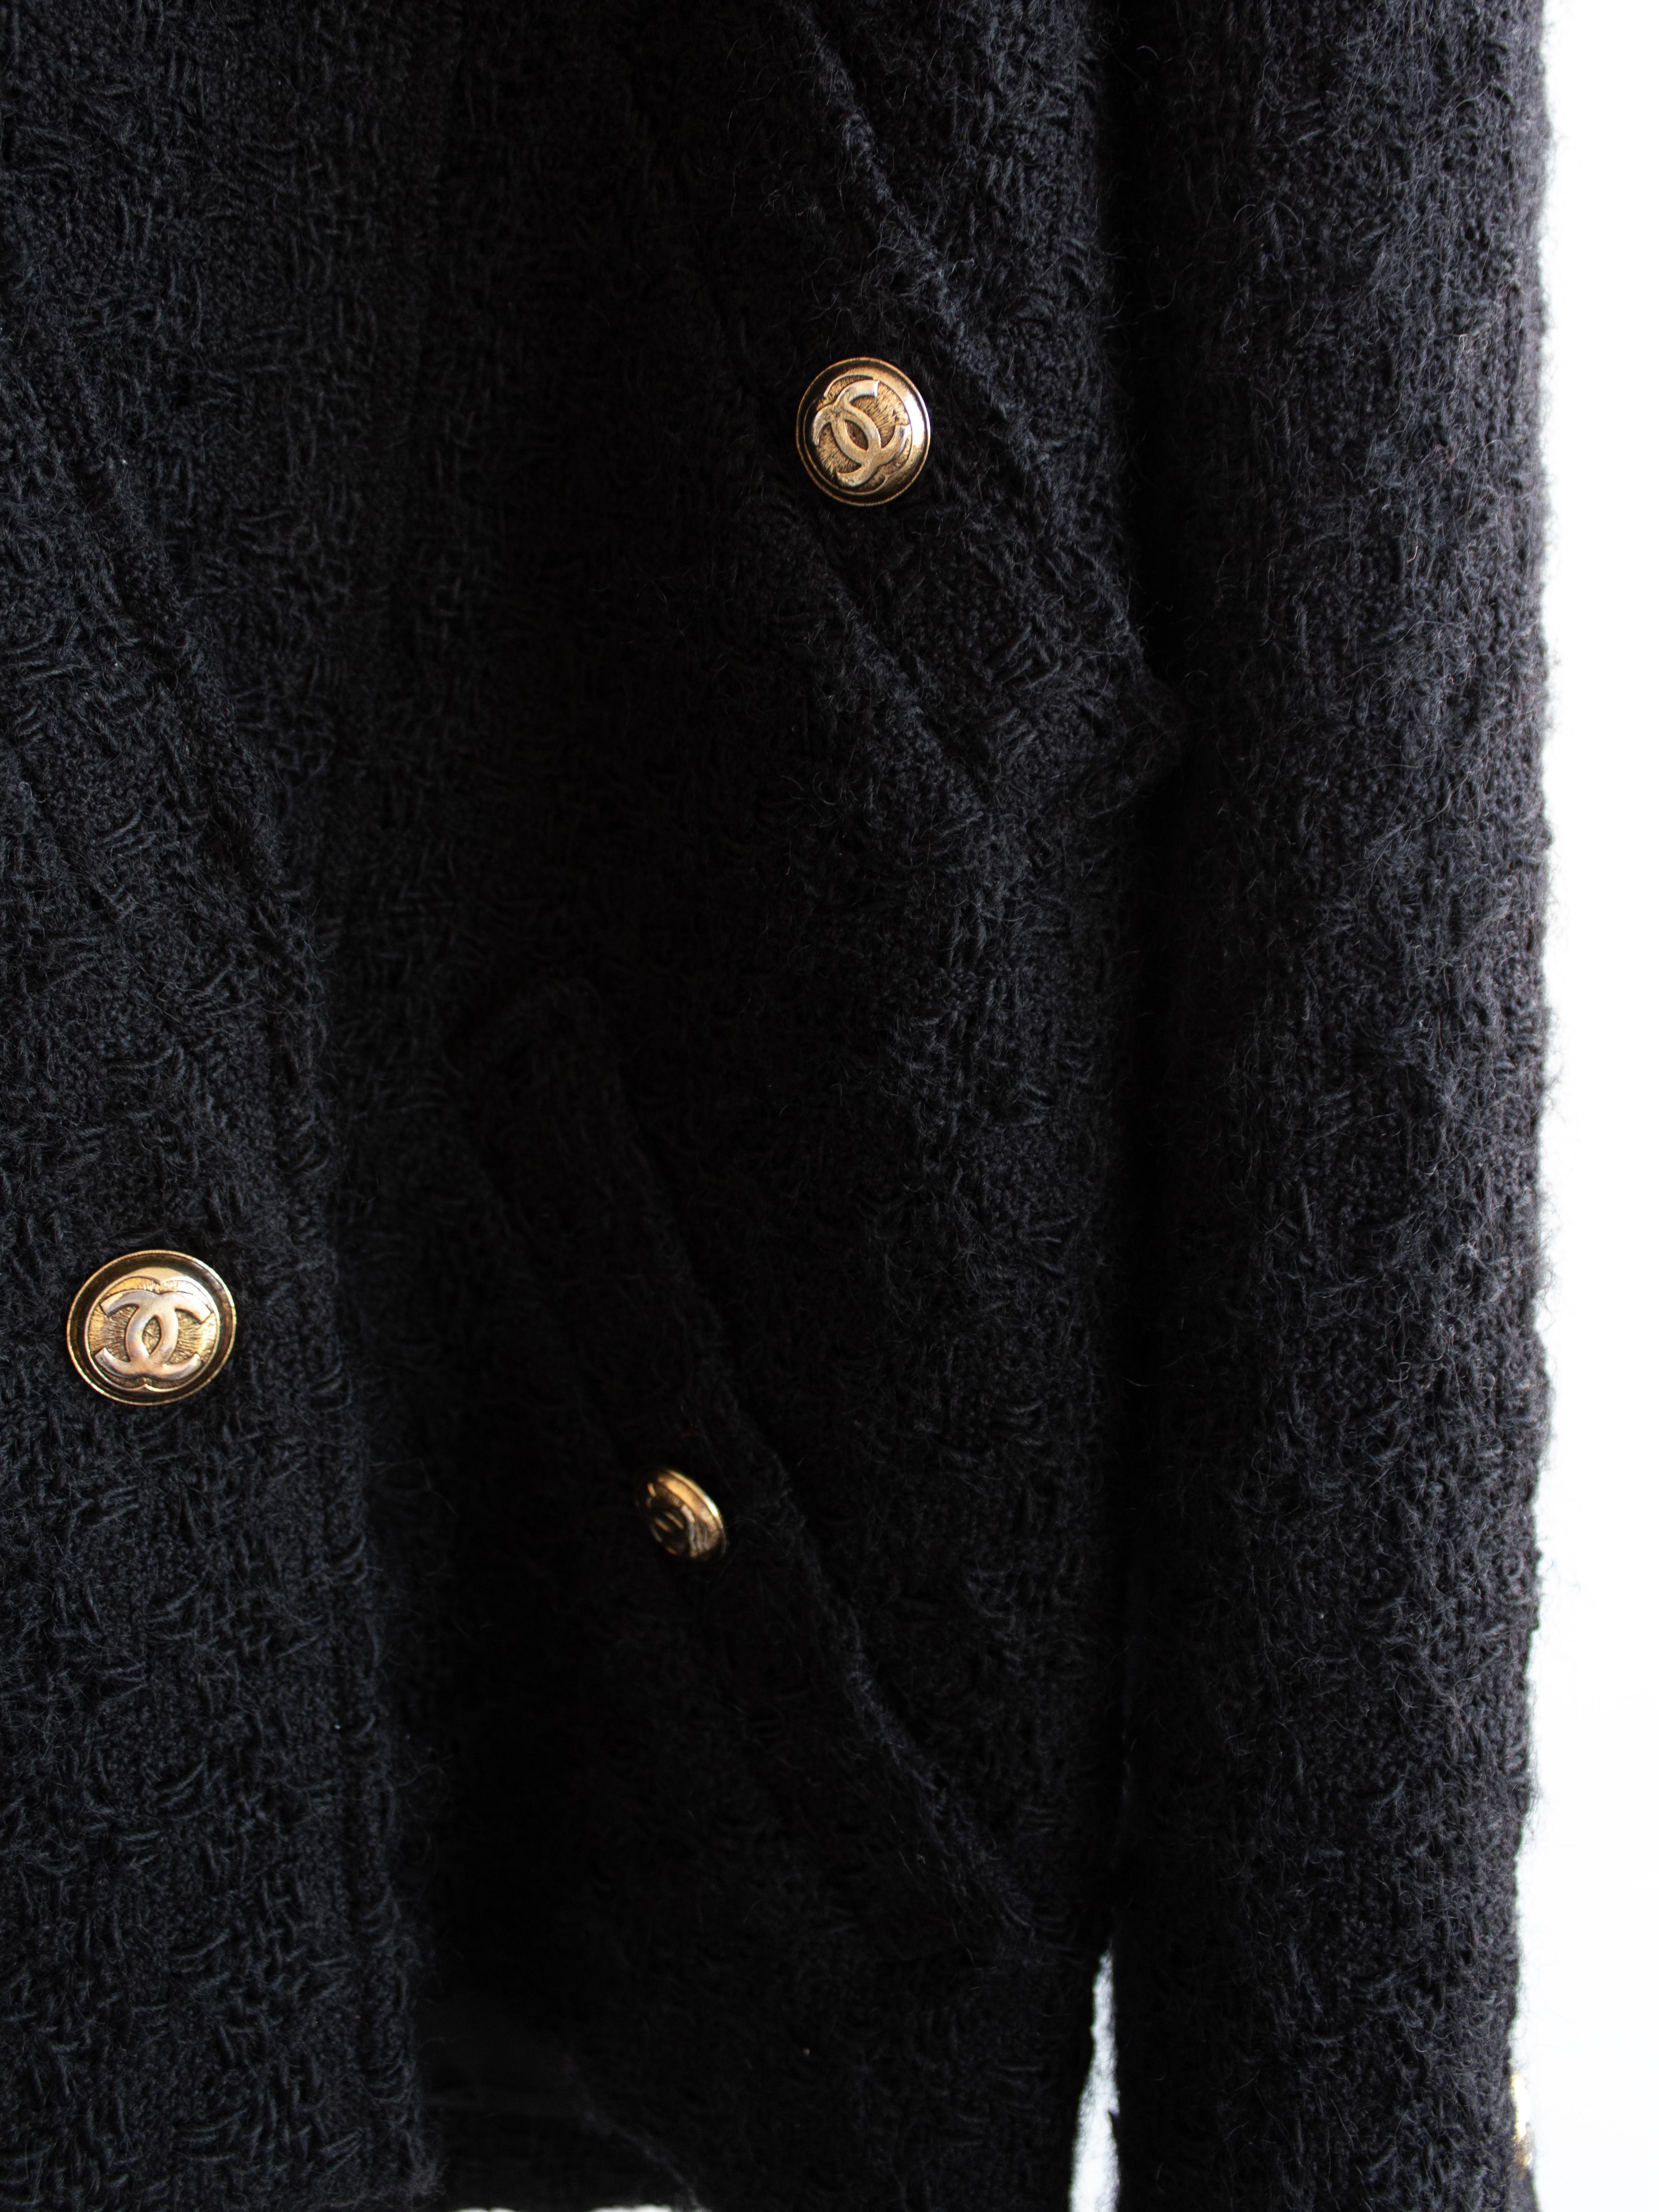 Chanel Vintage Fall Winter 1985 Black Gold 1980s LBJ Tweed Jacket Skirt Suit 6